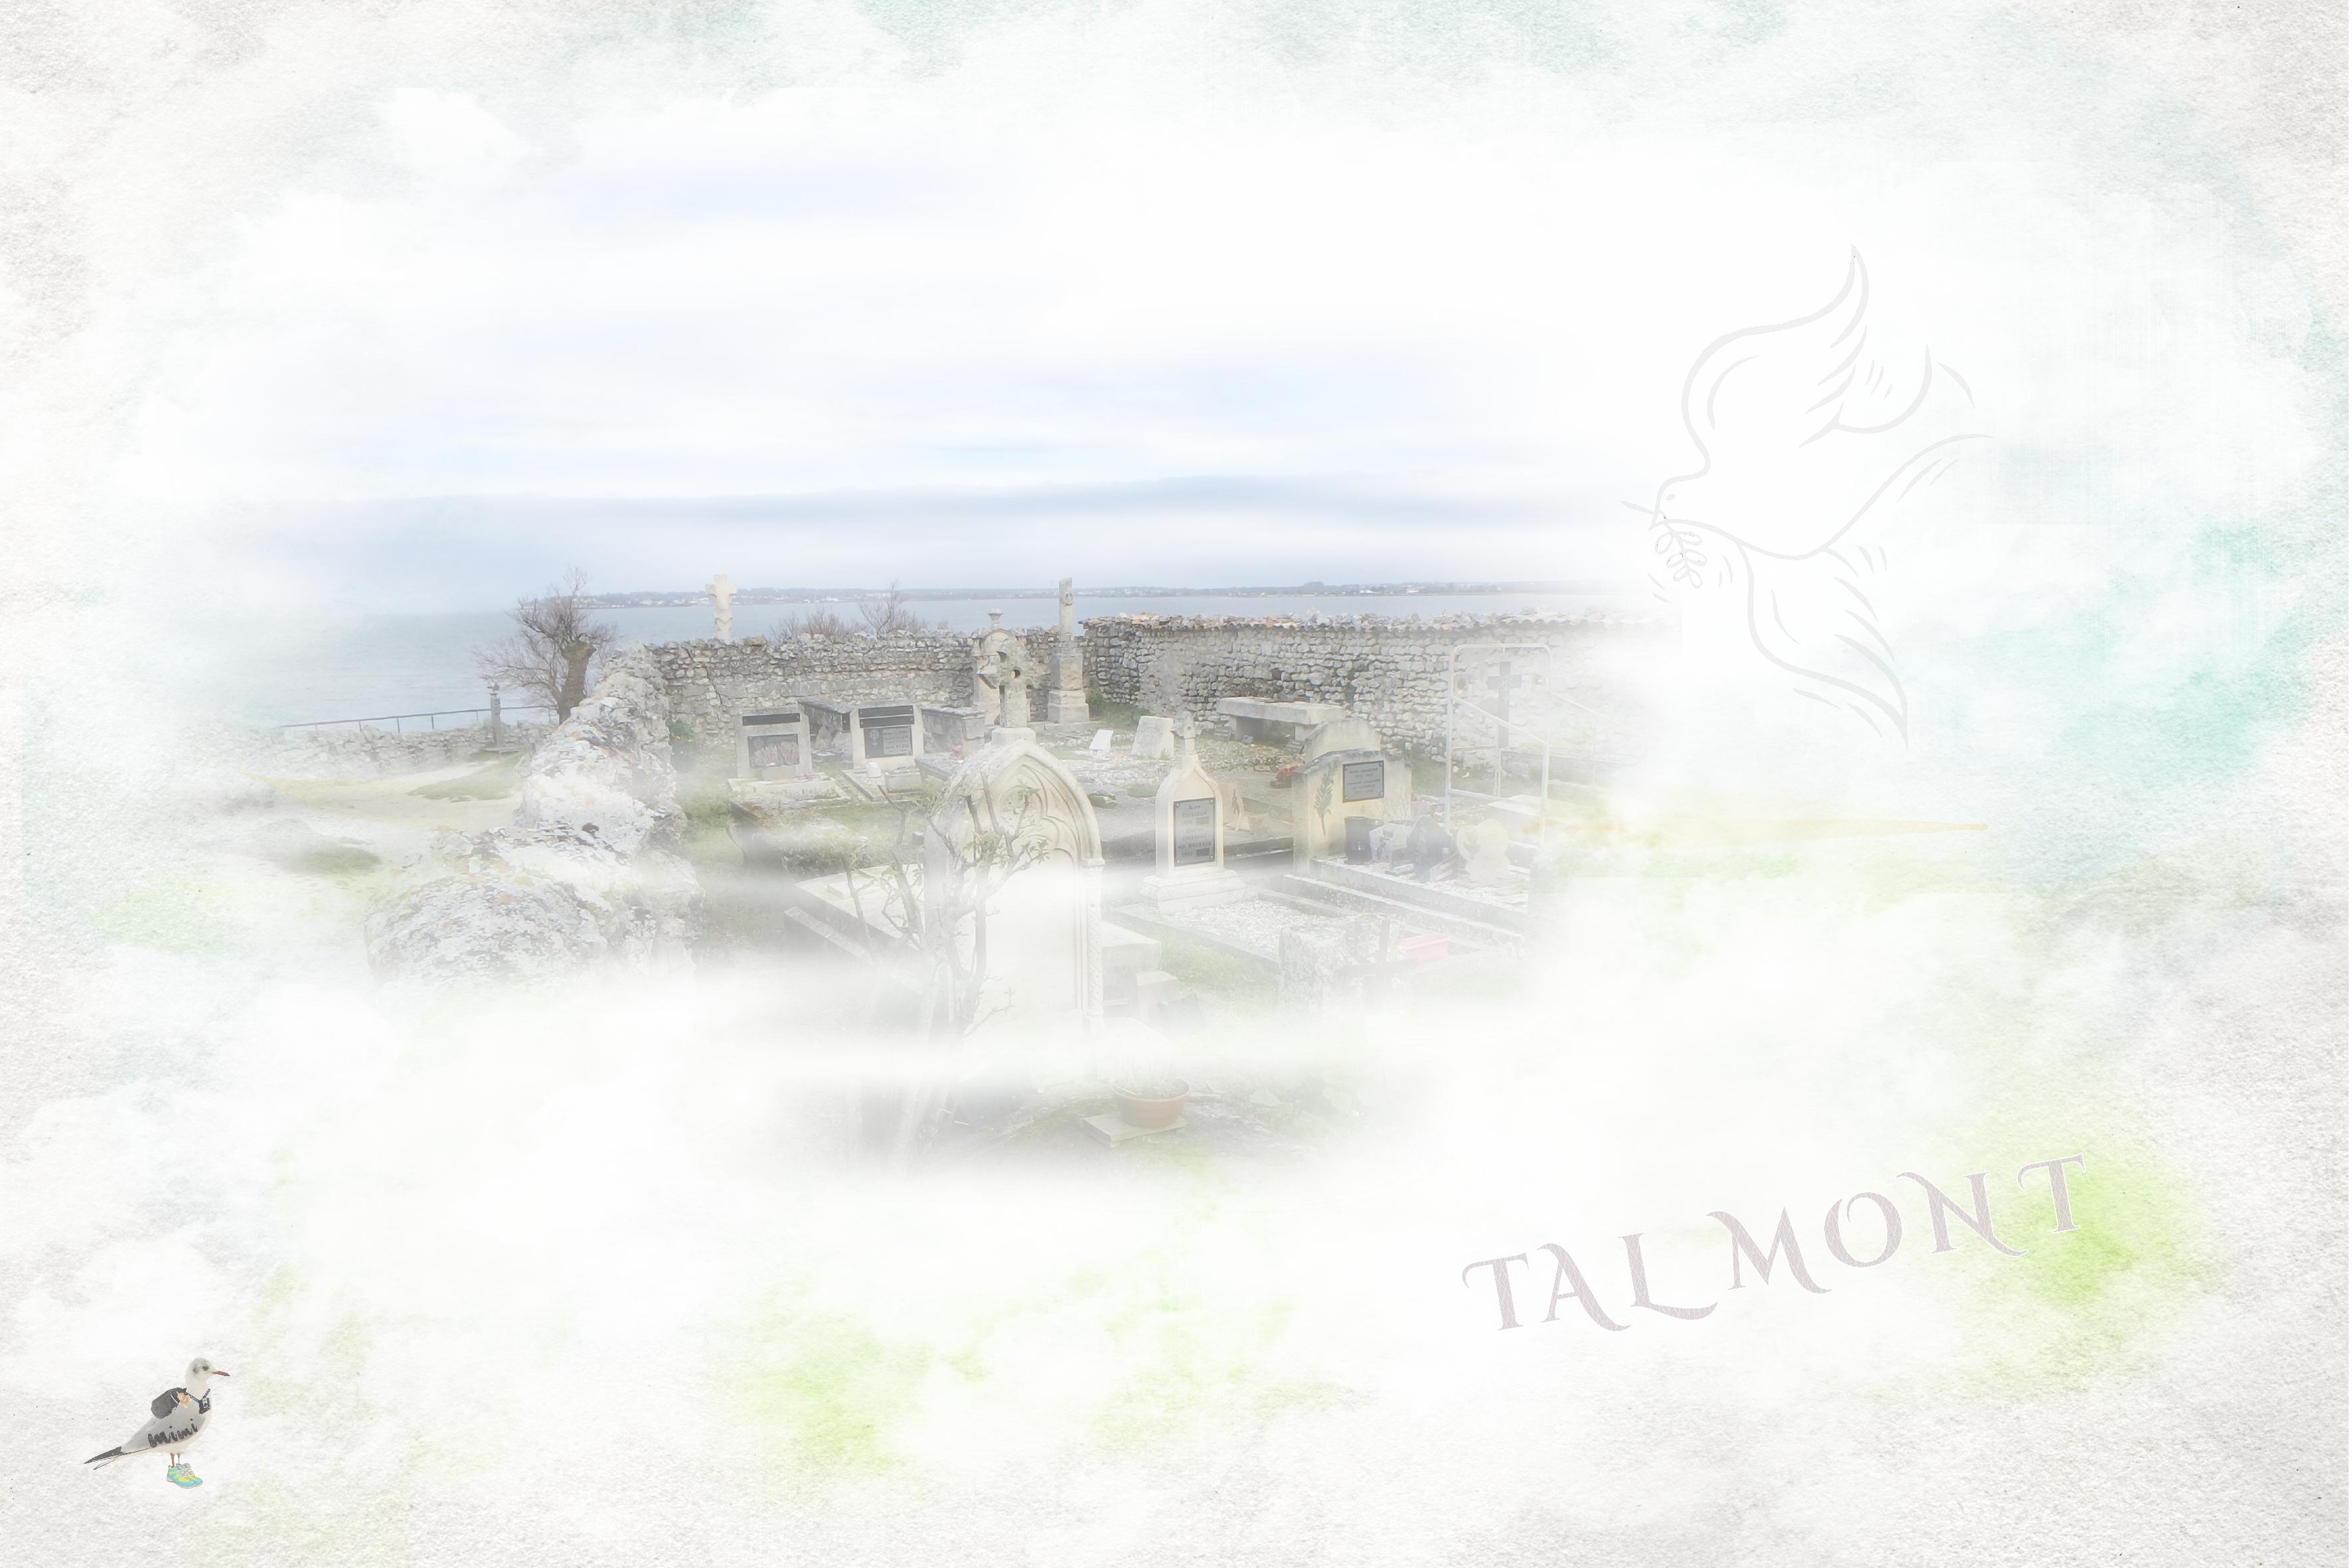 Talmont-18 mars.jpg